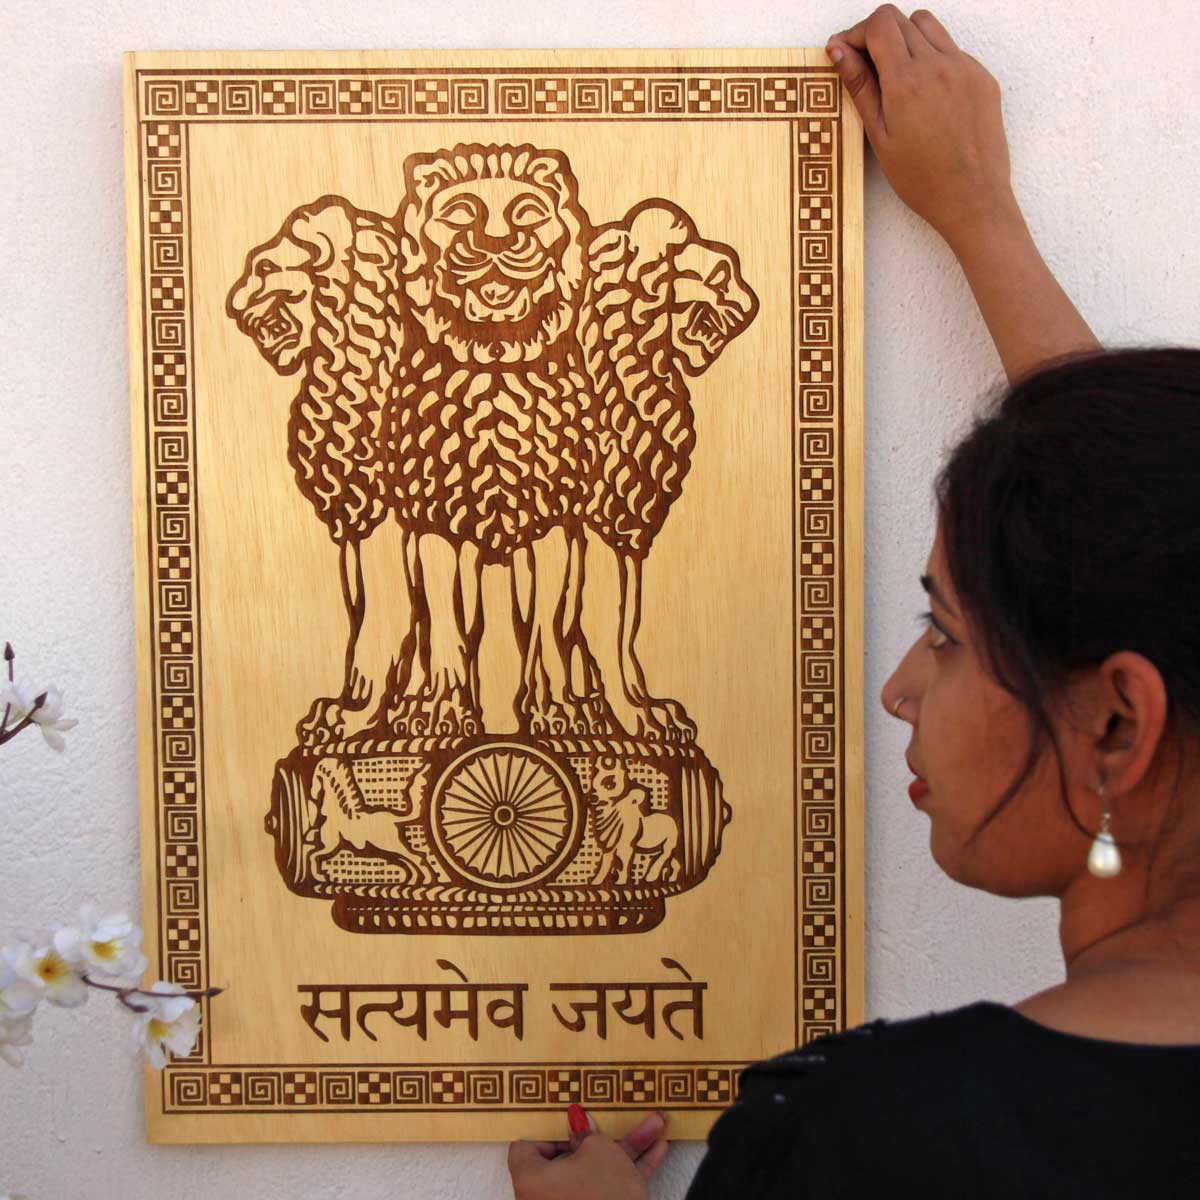 Buy Kalarambh Brass Ashok Stambh Emblem Sculpture Ashoka Chakra Pillar Four  Lions for Home Office Table Desk Decor Collectible Handicraft Art, Yellow,  12.3 x 1.8 x 19.5 Inch (L x W x